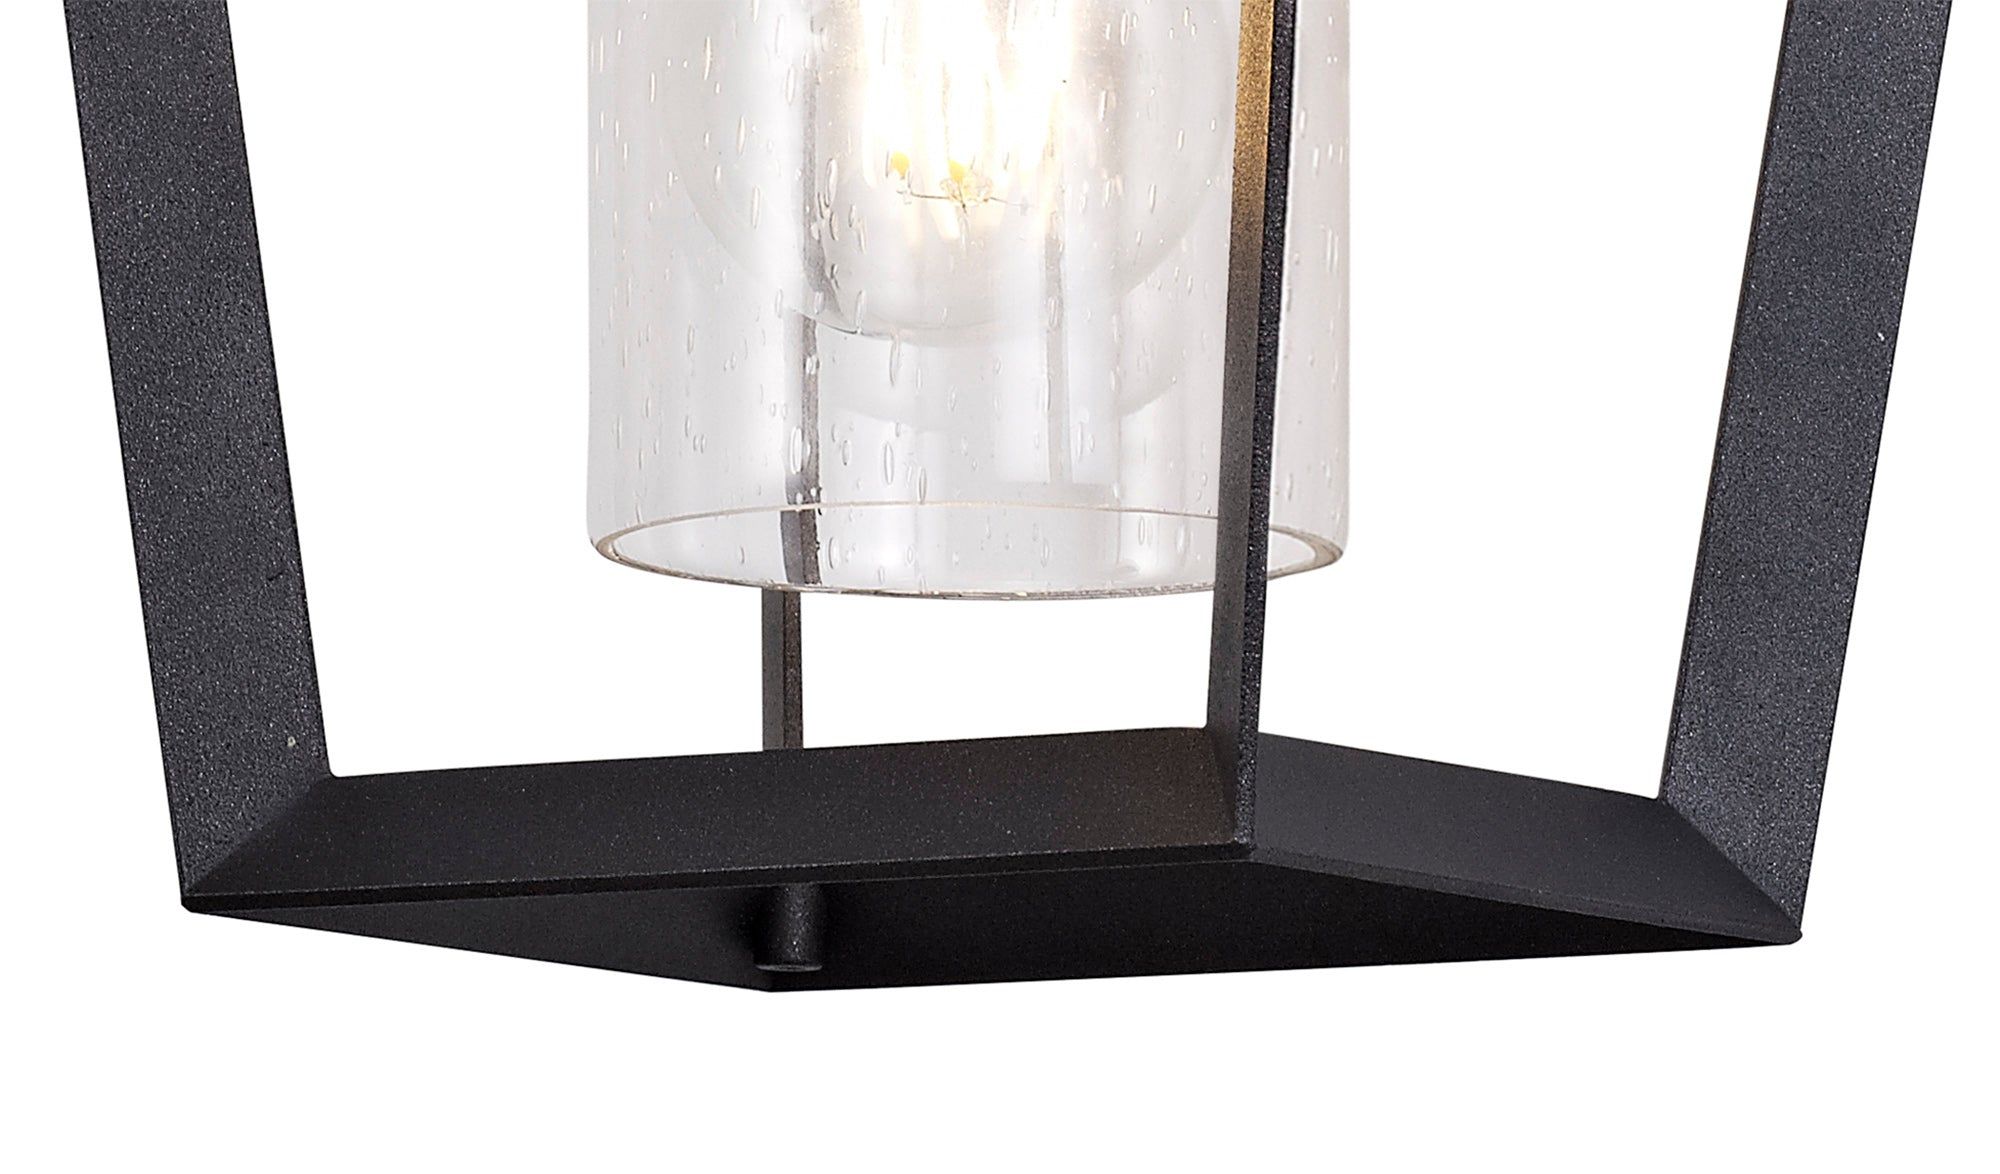 Silva Down Wall Lamp, 1 x E27, IP54, Anthracite/Clear Rain Drop Effect Glass, 2yrs Warranty